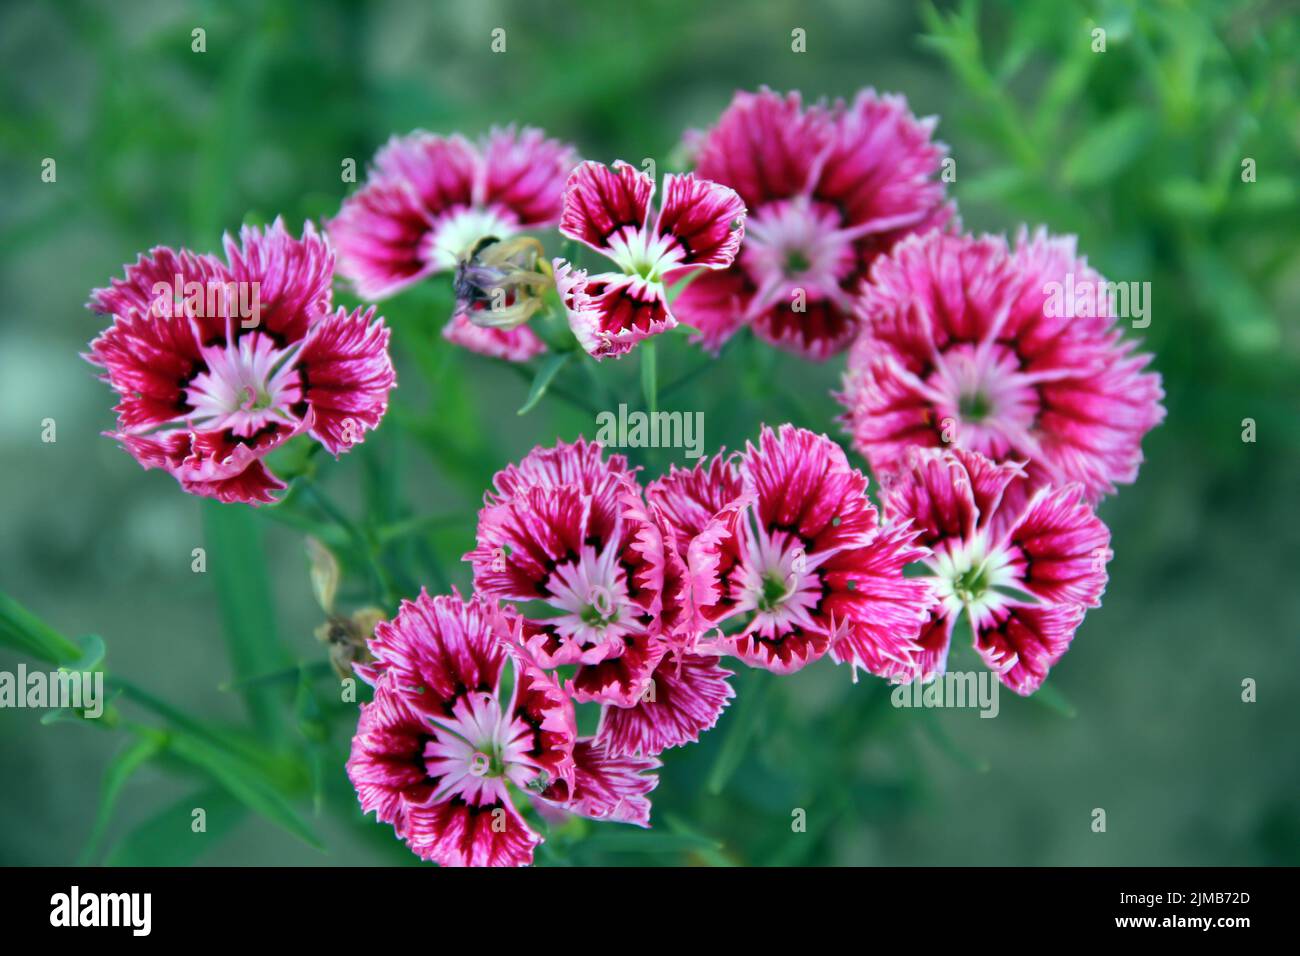 Dianthus barbatus, sweet william flower plant blooming Beautiful pink flowers in nature Stock Photo